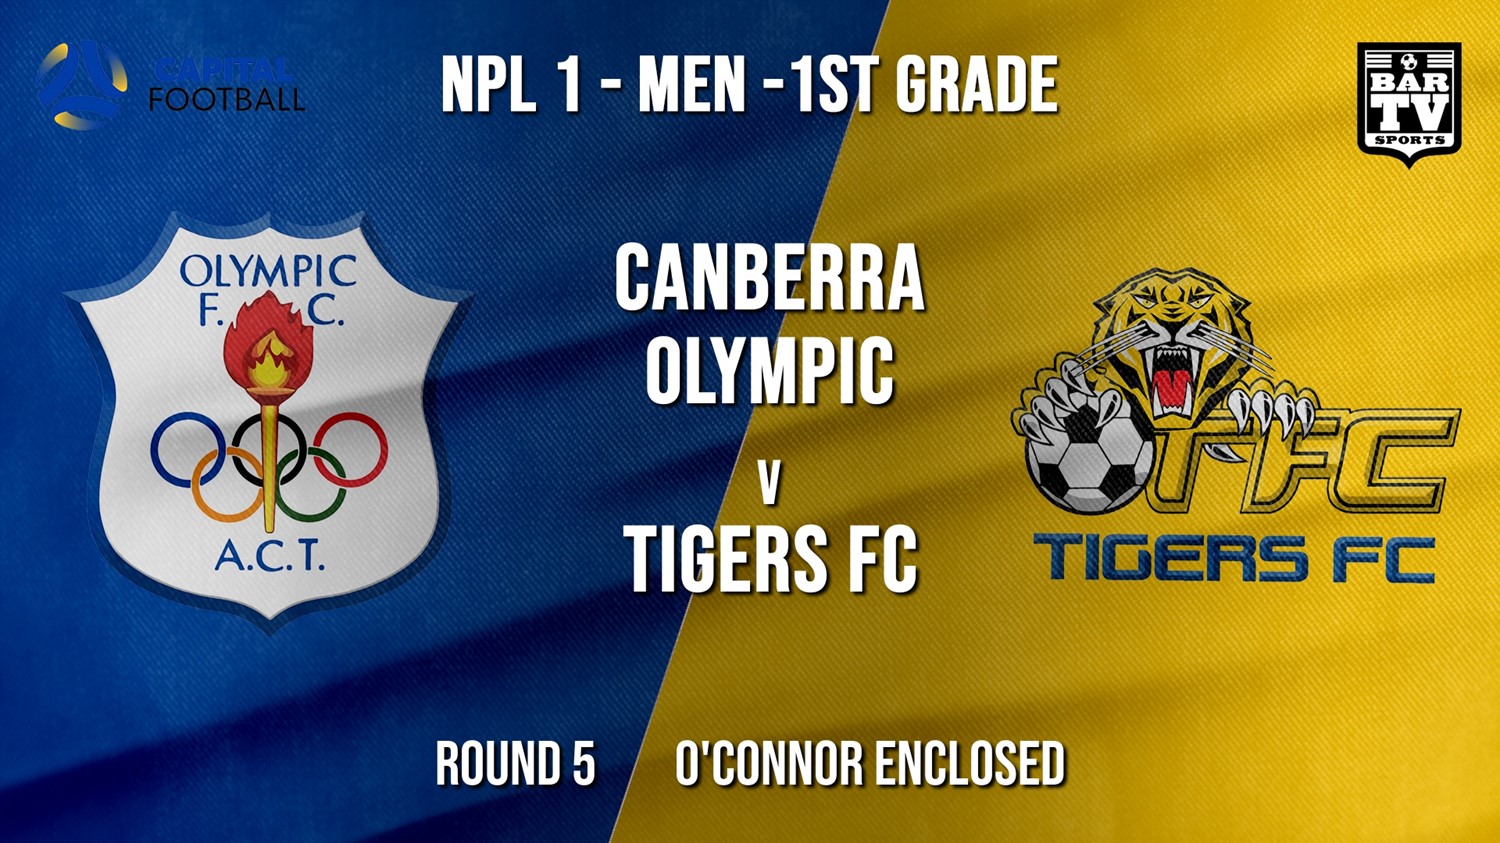 NPL - CAPITAL Round 5 - Canberra Olympic FC v Tigers FC Minigame Slate Image